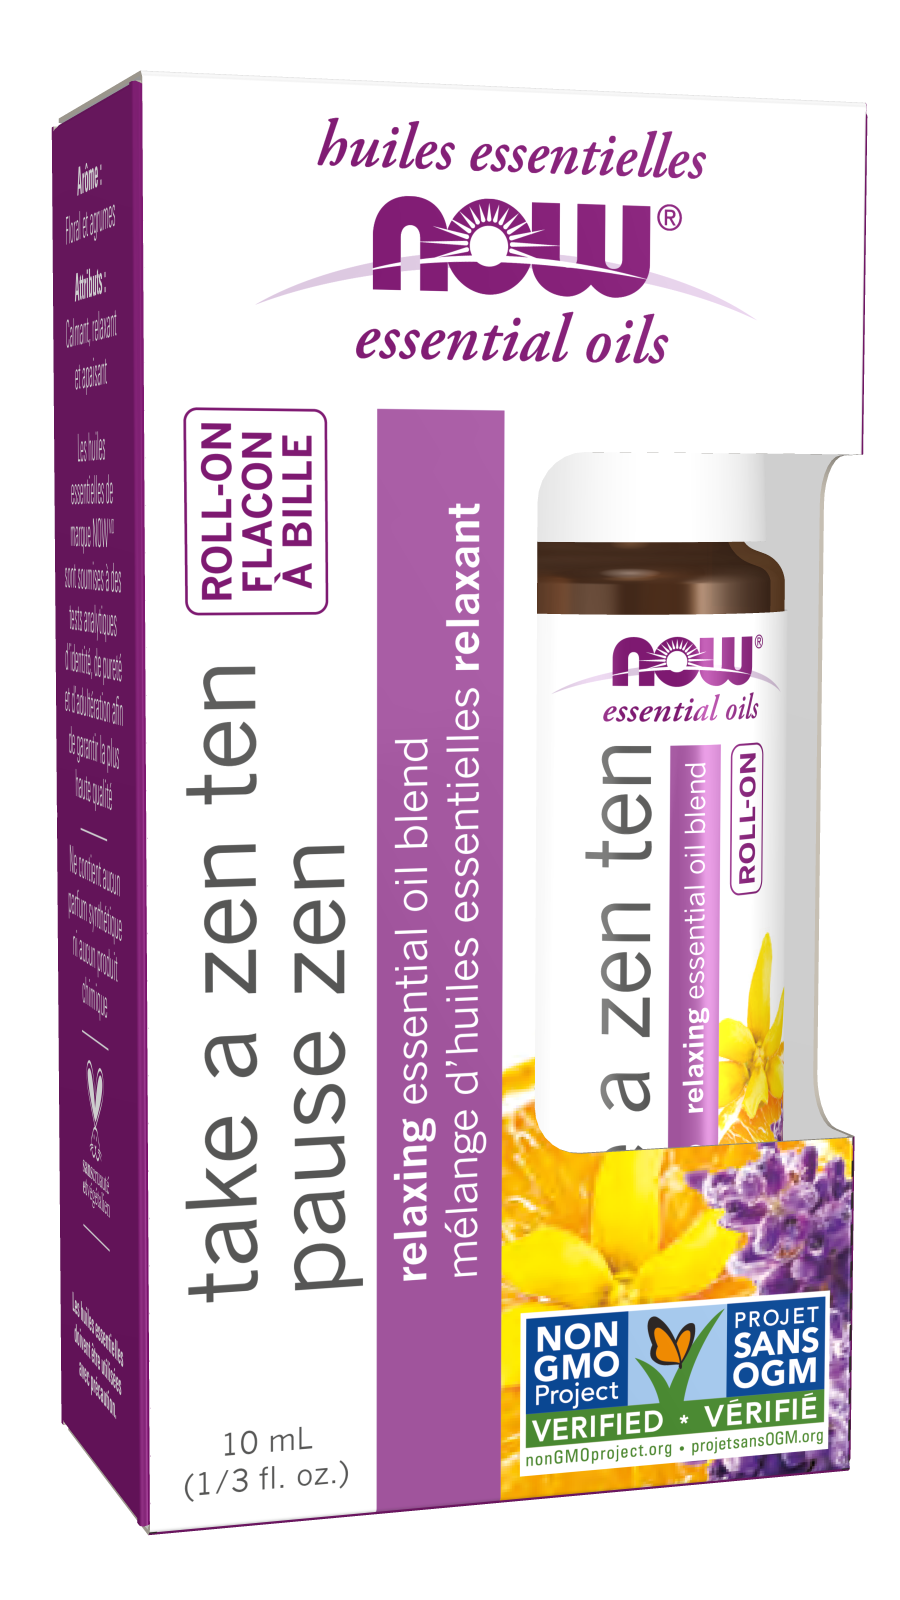 Now Foods Lavender Essential Oil 2 Fluid oz